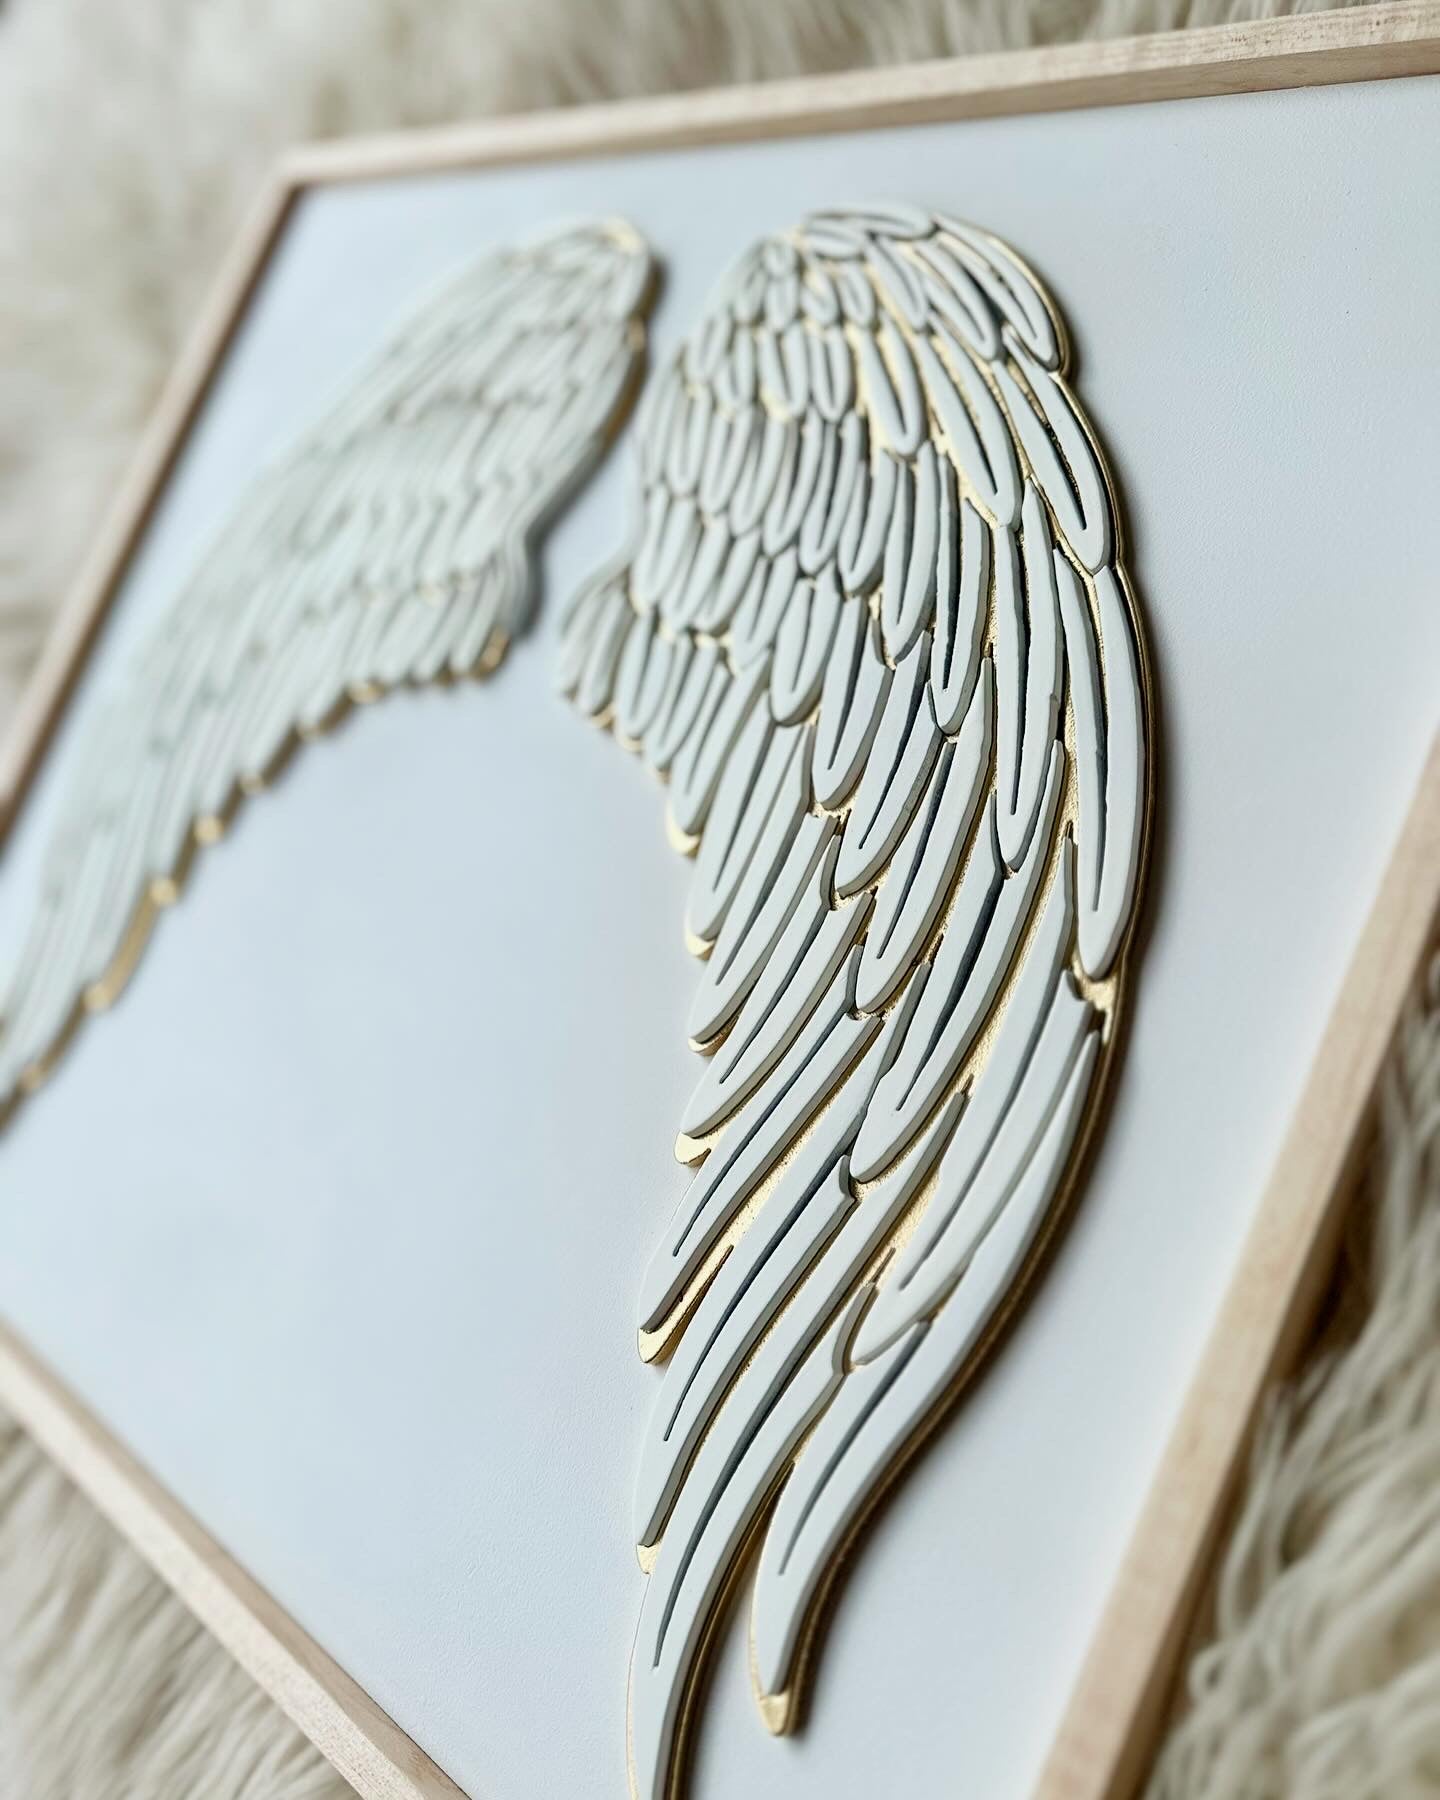 Auryn Angel Wings